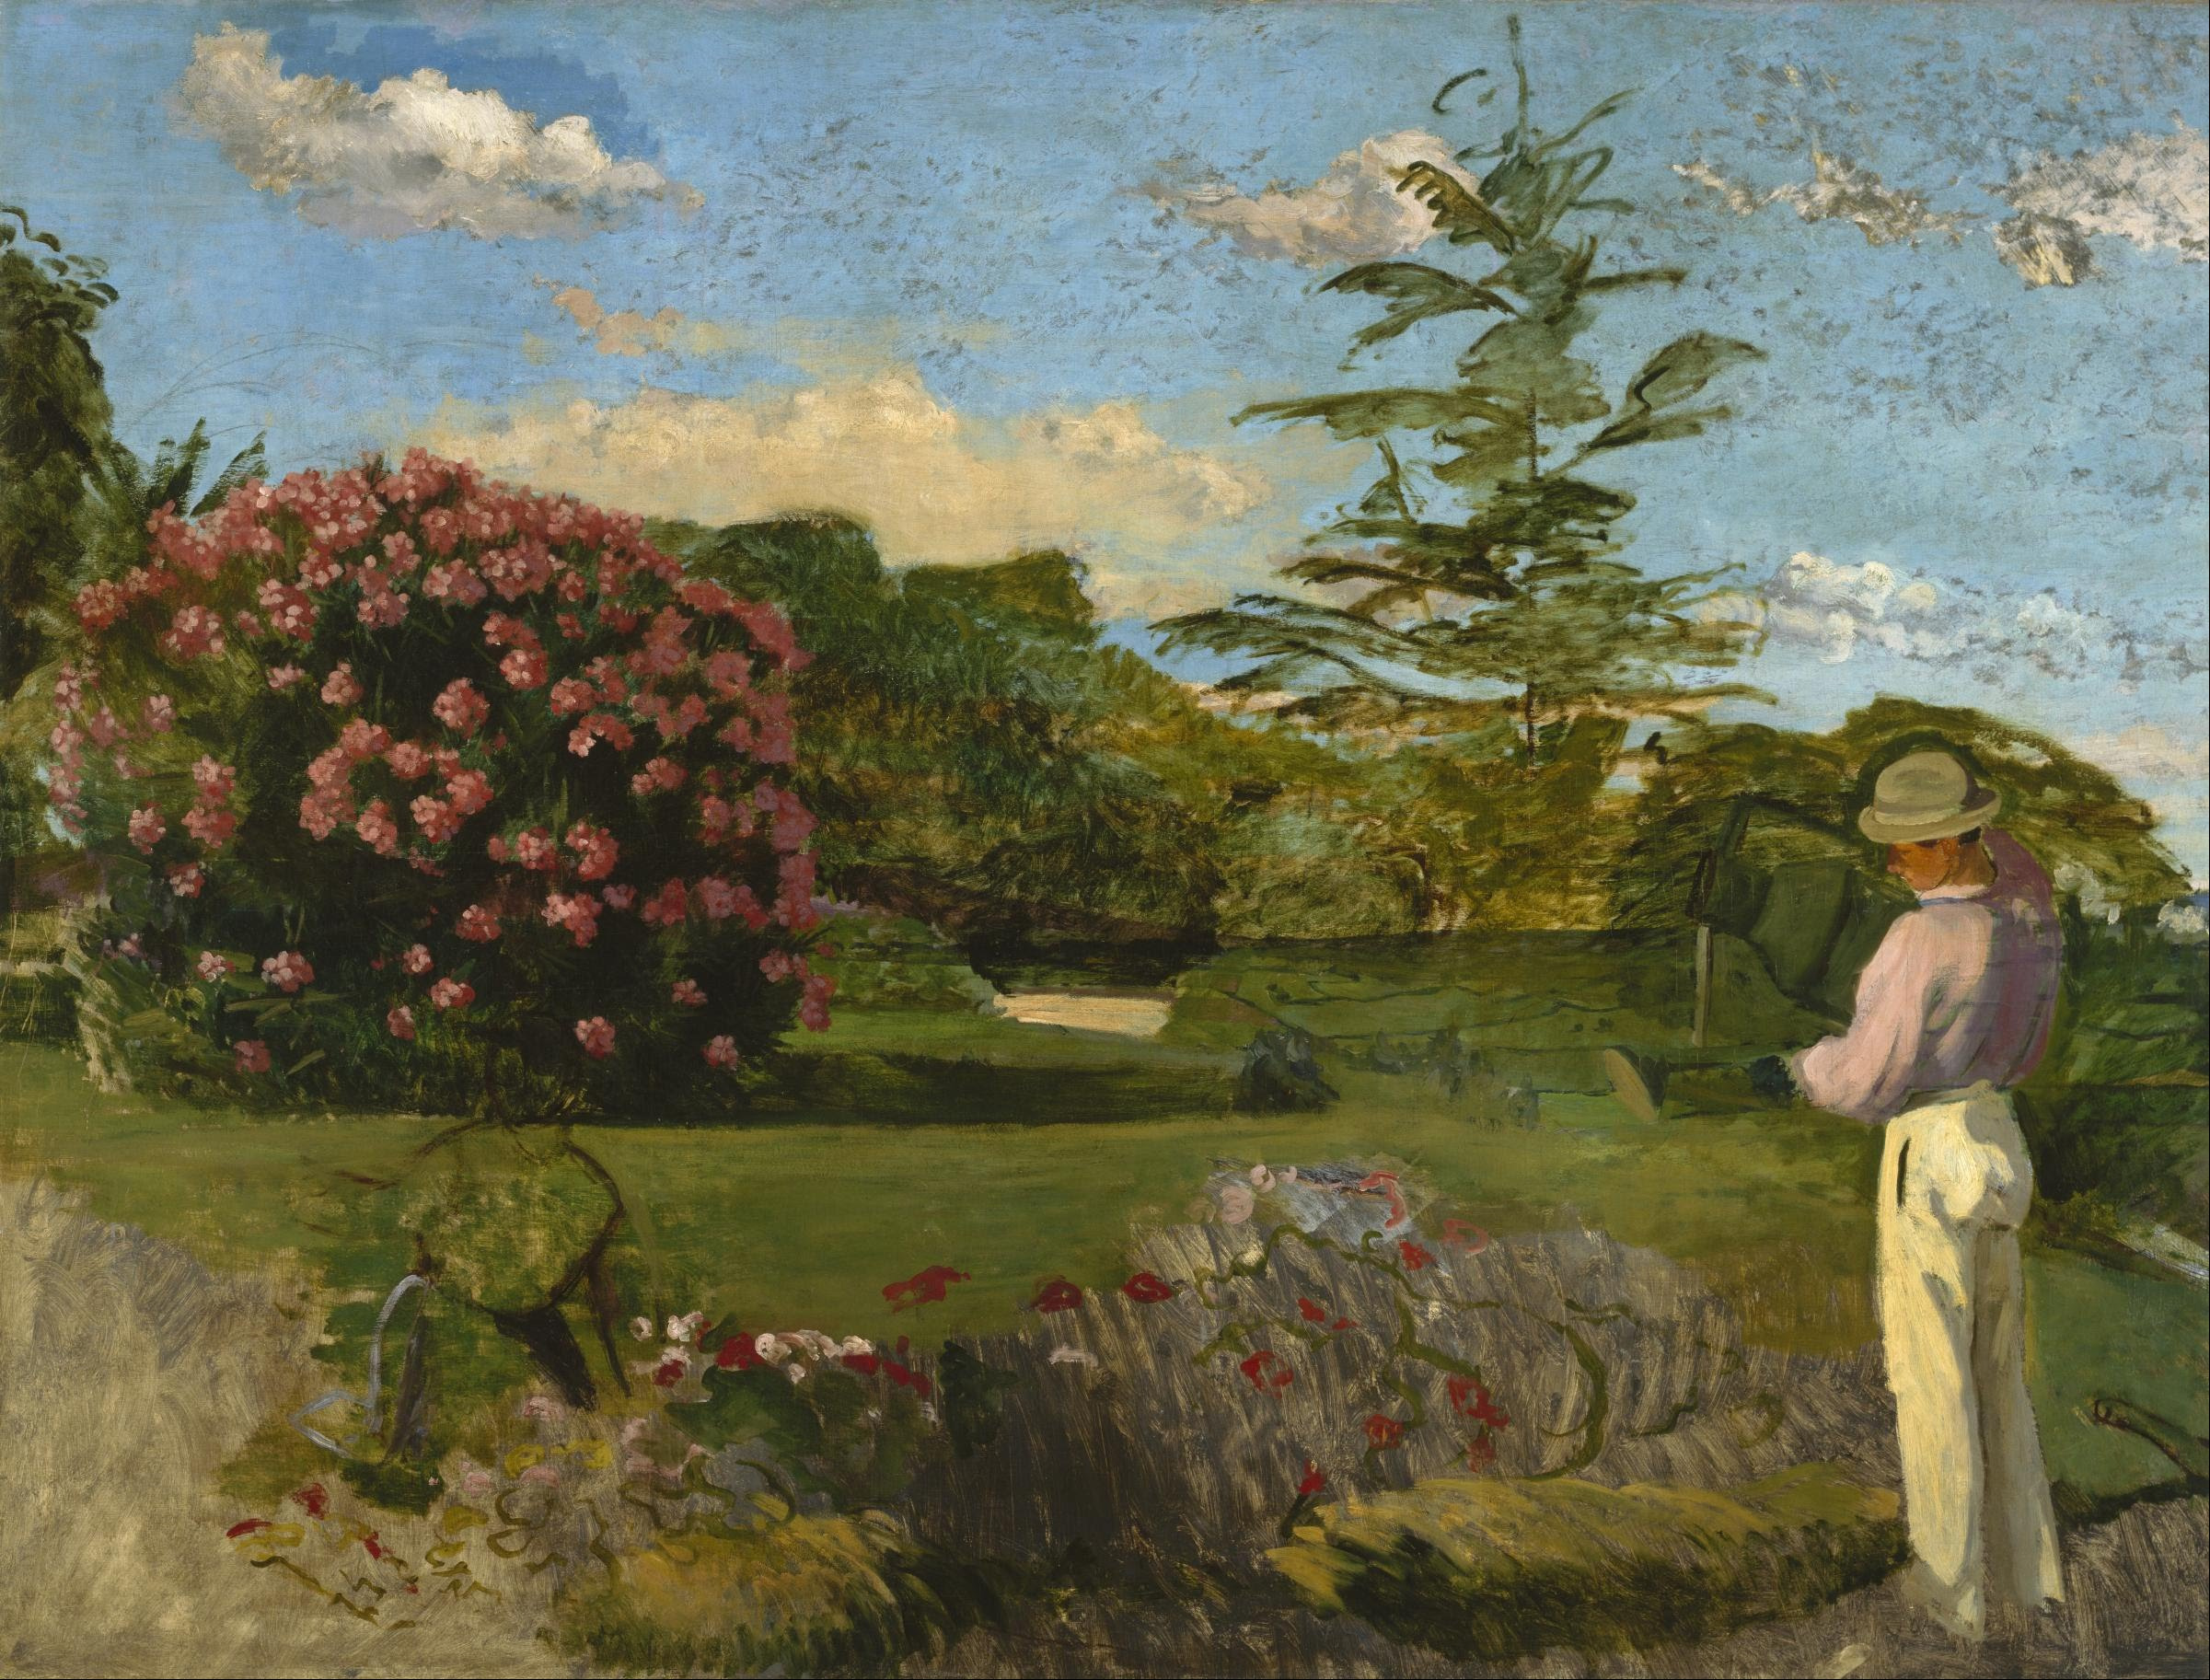 Il piccolo giardiniere by Frédéric Bazille - c.1866 - 127 x 170 cm 